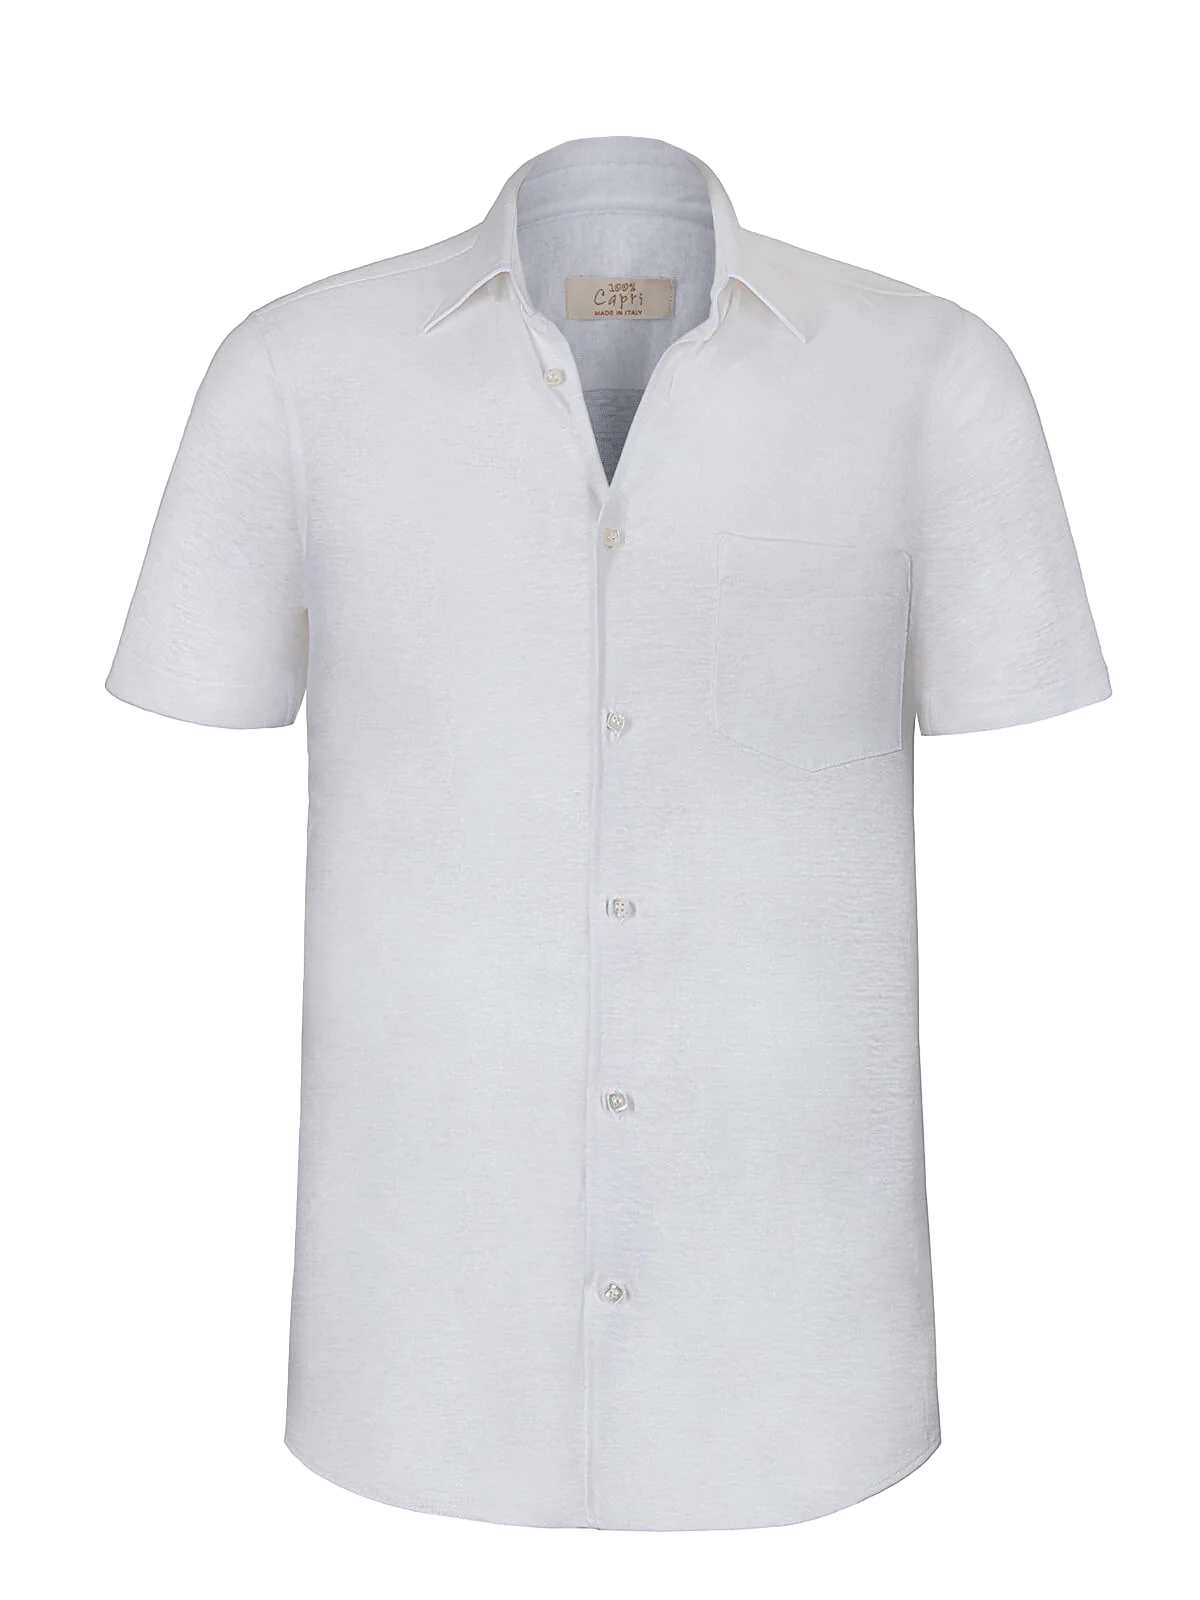 Camicia Short Sleeve 100% Capri white linen shirt front